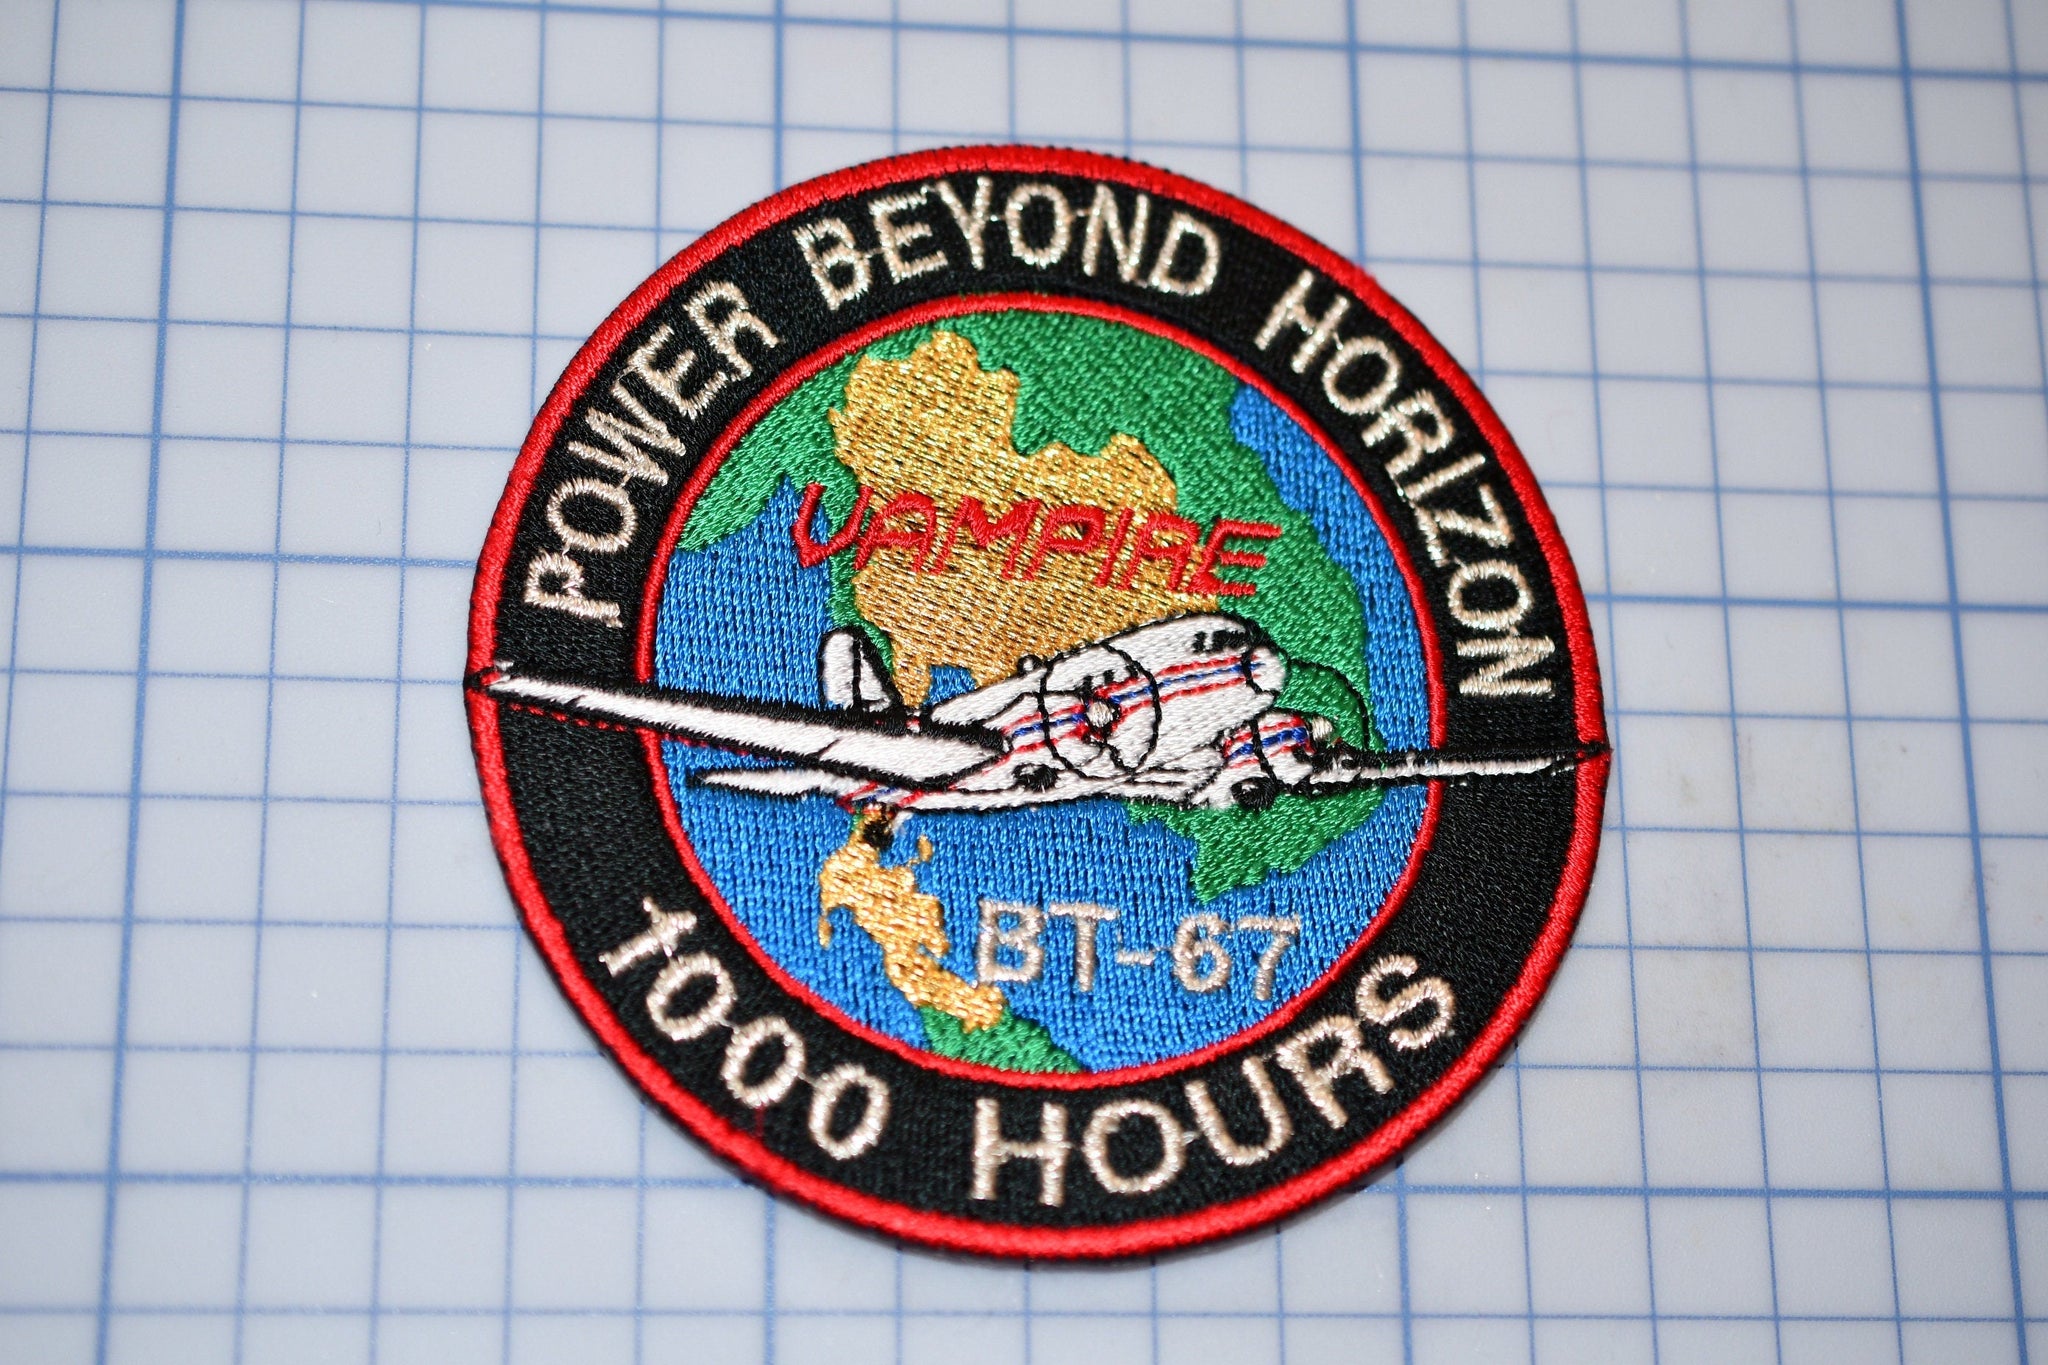 BT-67 Vampire 1000 Hours "Power Beyond Horizon" Patch (B11-262)